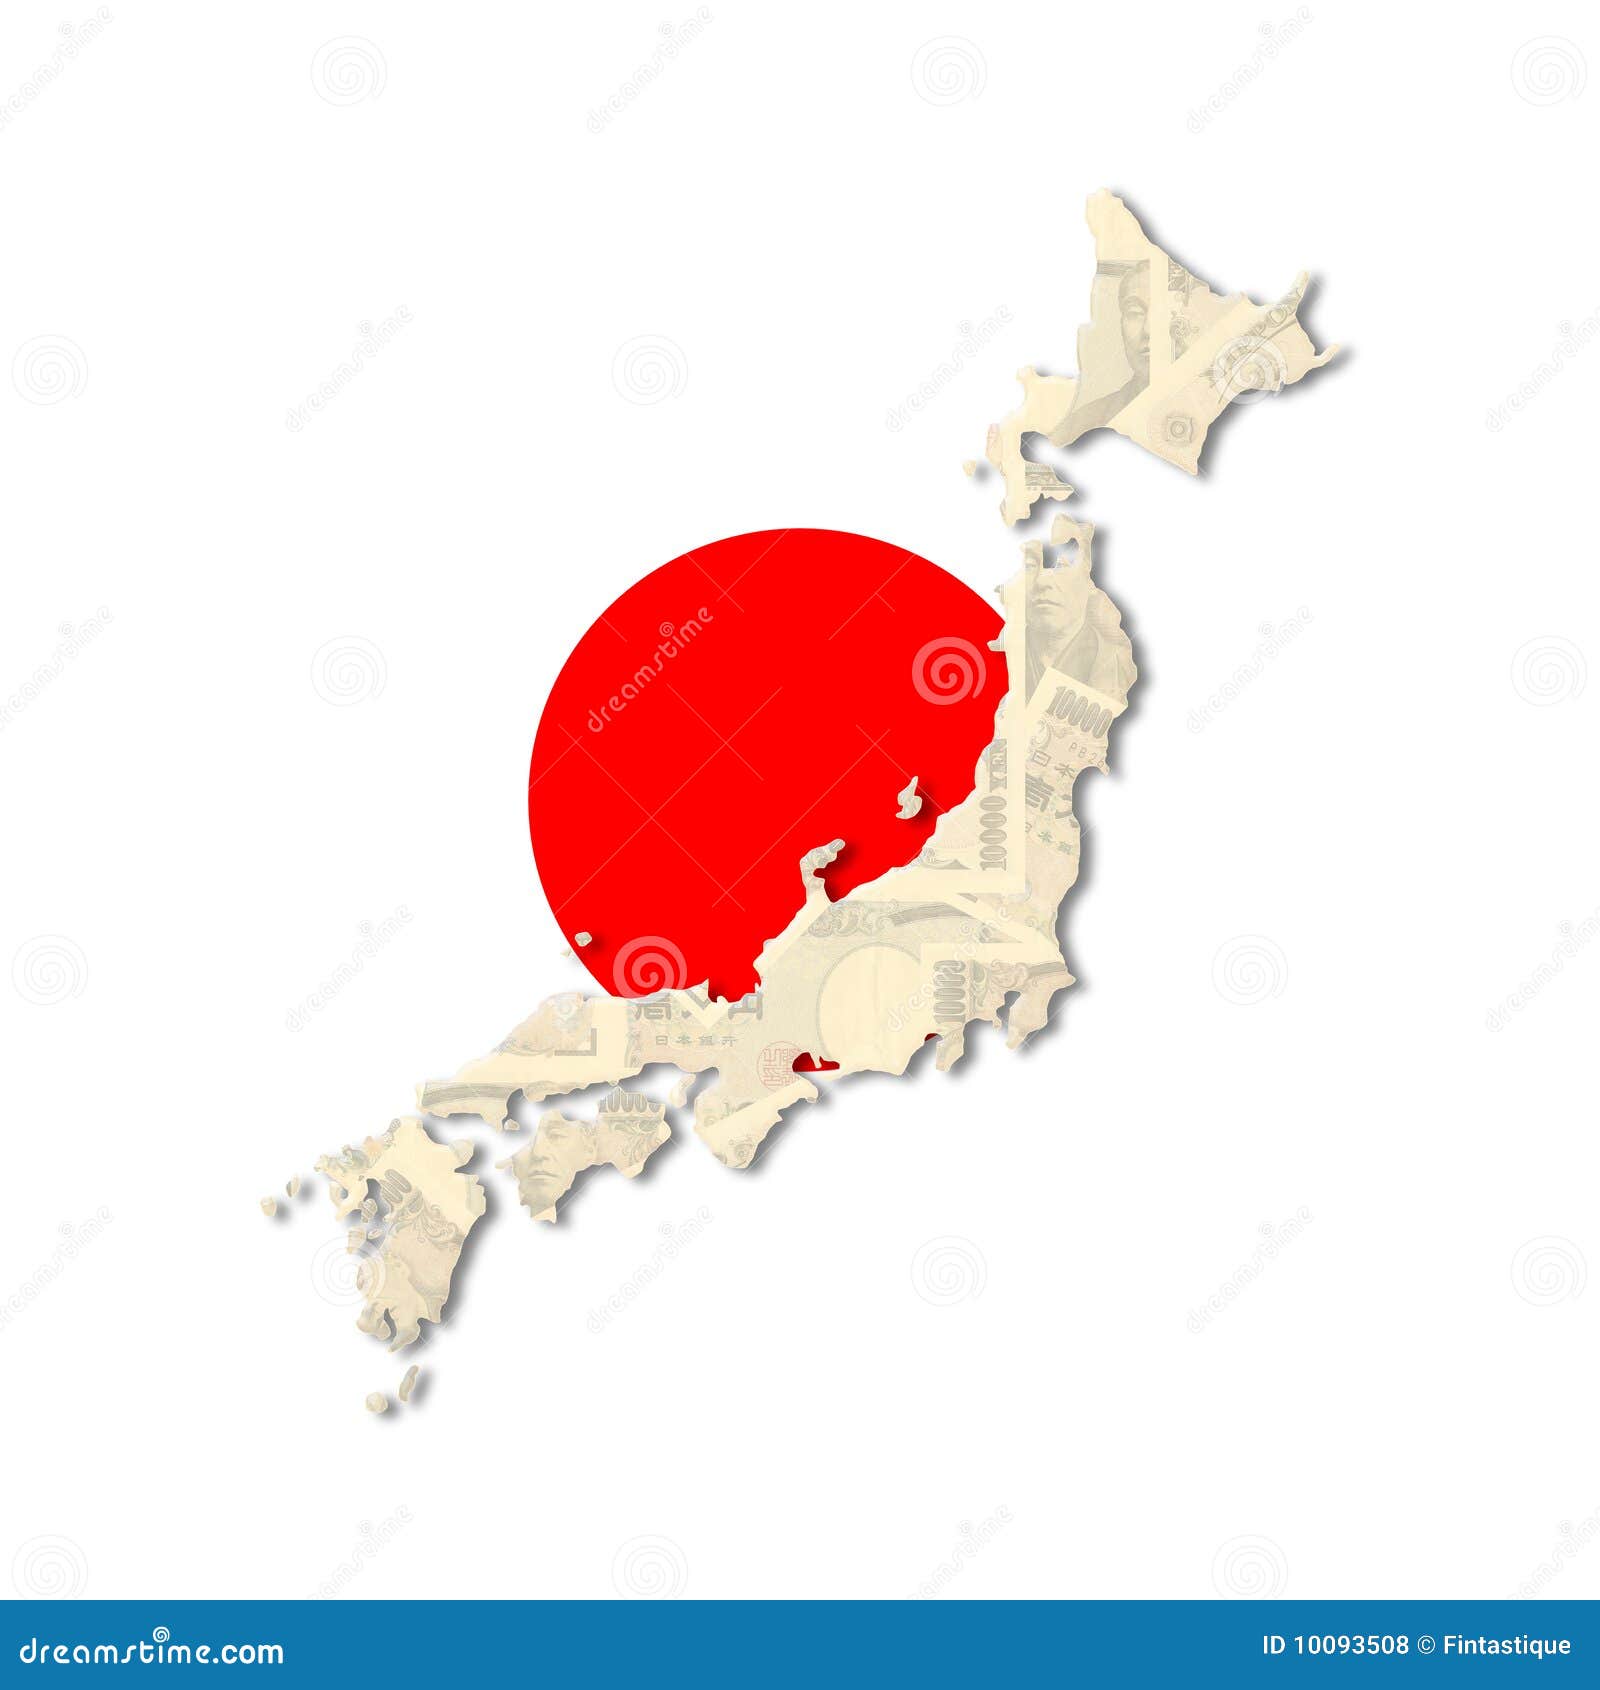 clipart japan map - photo #12